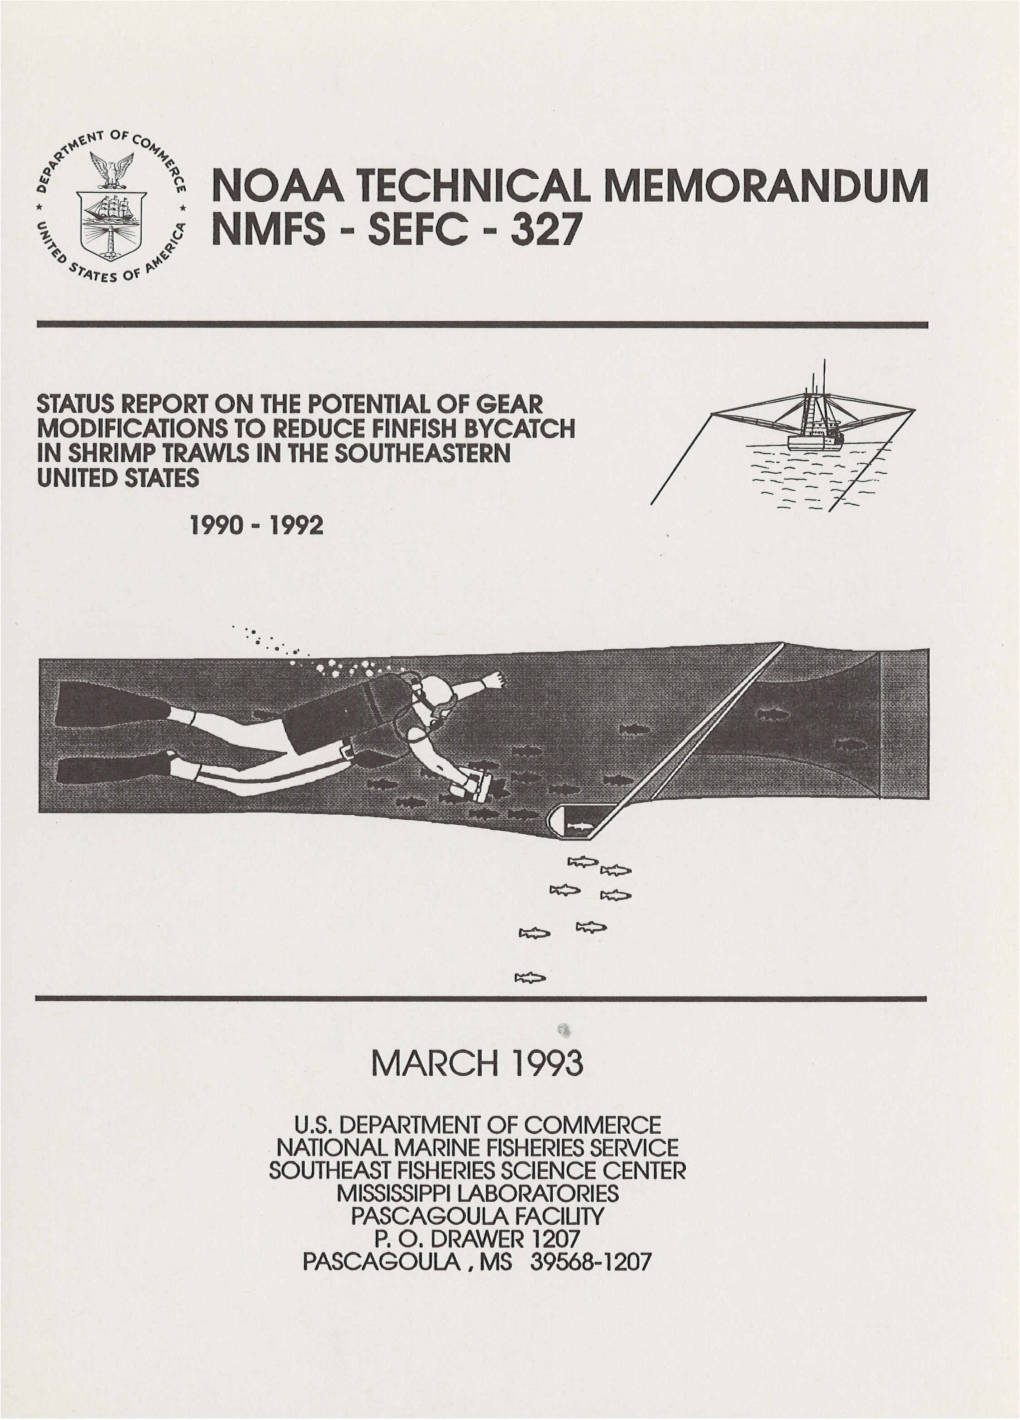 Noaa Technical Memorandum Nmfs - Sefc - 327